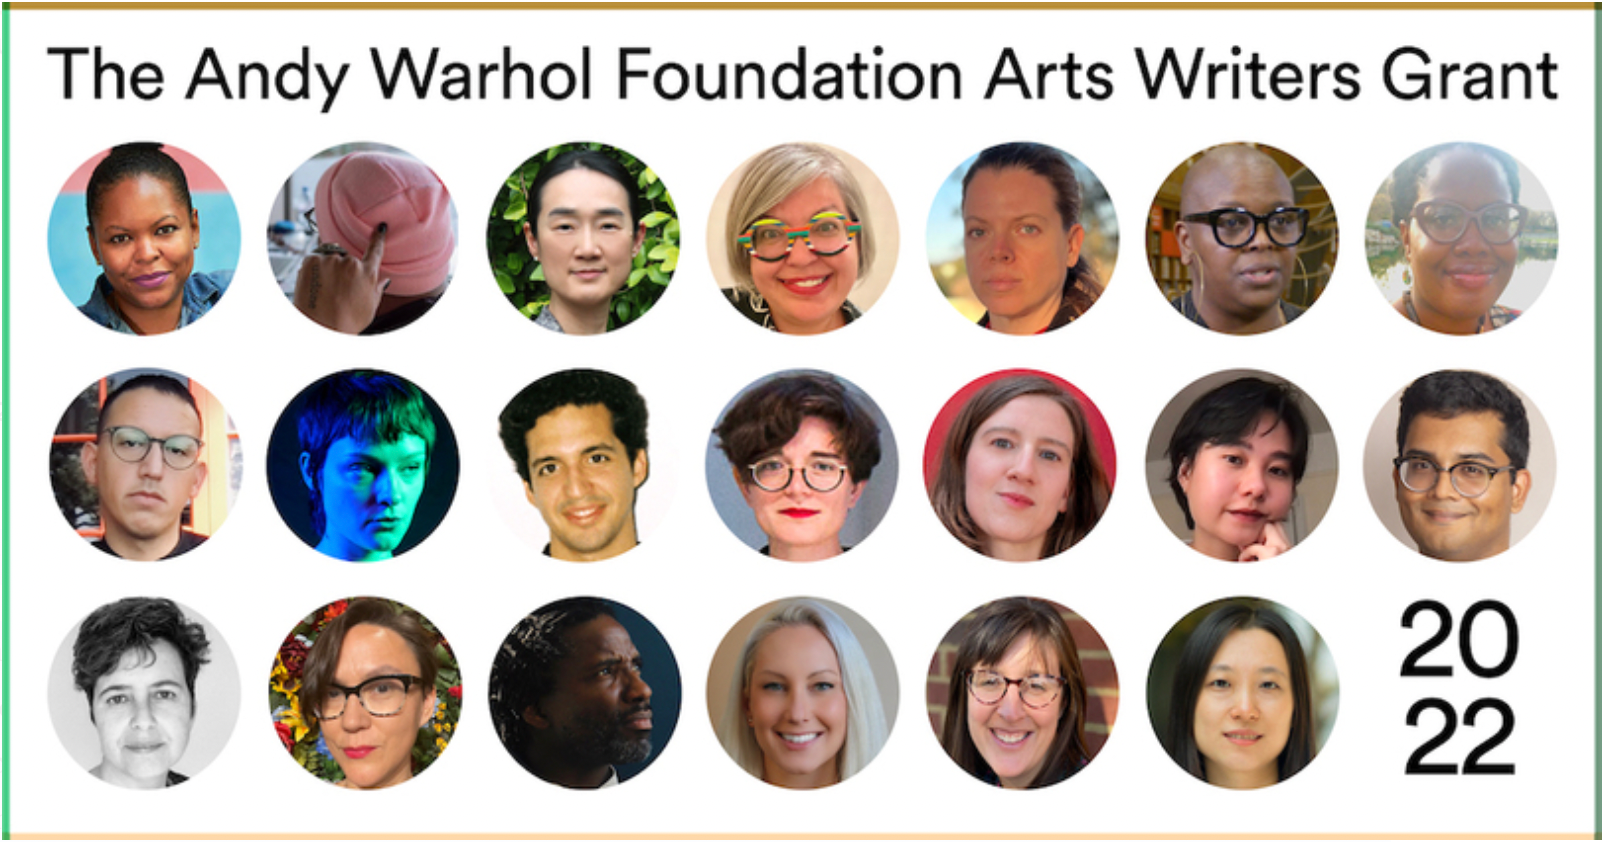 Warhol Foundation Announces Recipients of 2022 Arts WriterGrants